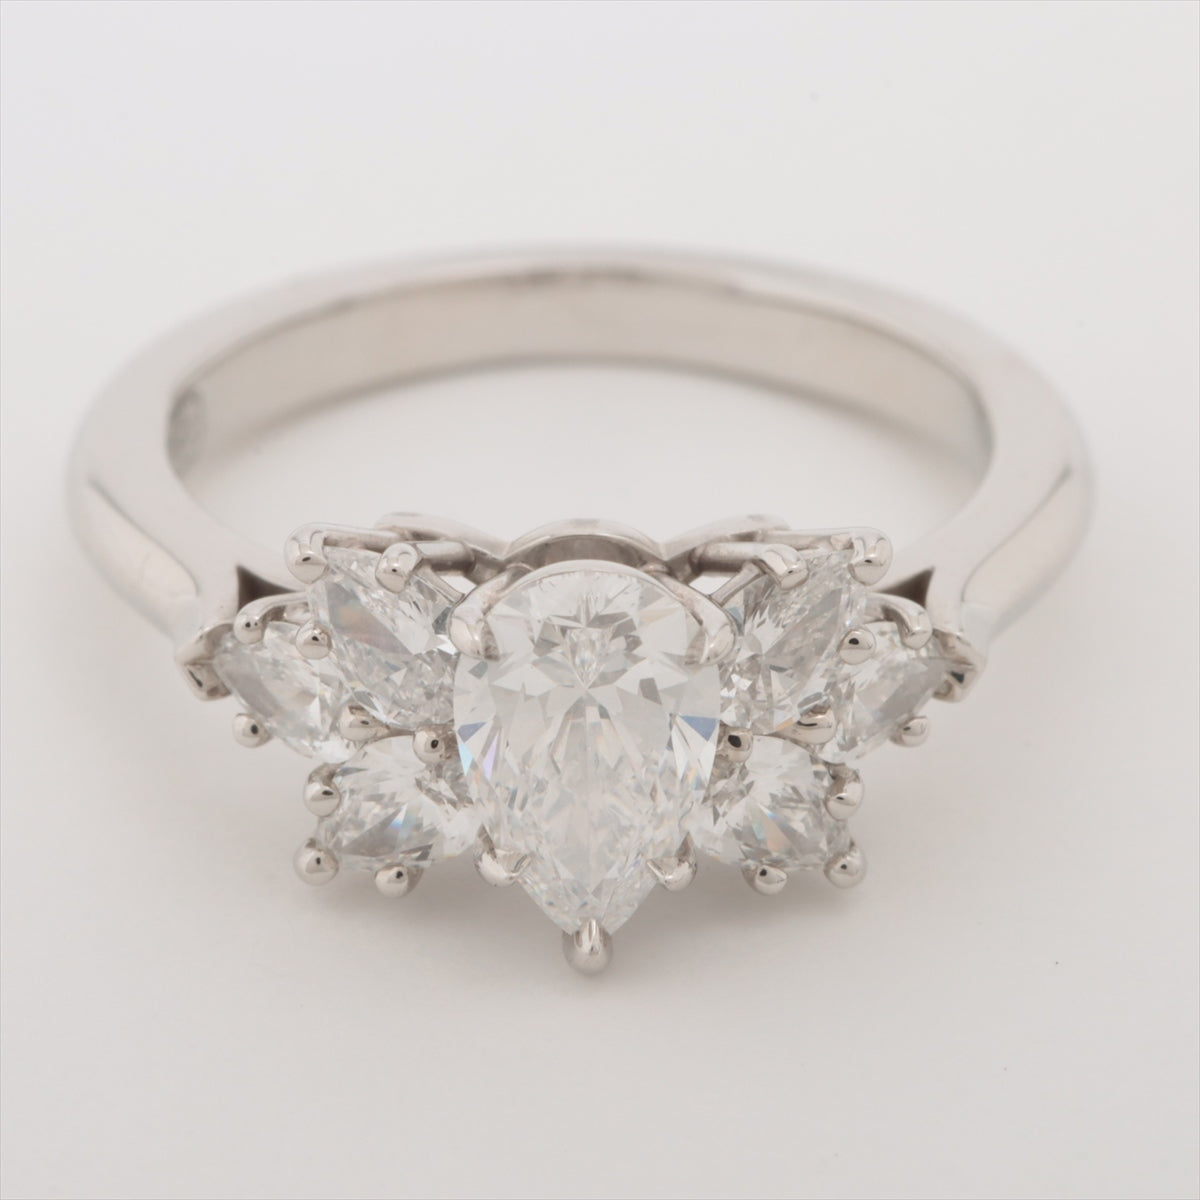 Harry Winston Pear Shape Cluster Diamond Ring Pt950 4.8g 0.57 D VS1 Pear-shaped NONE RGDPPS005CLU-040